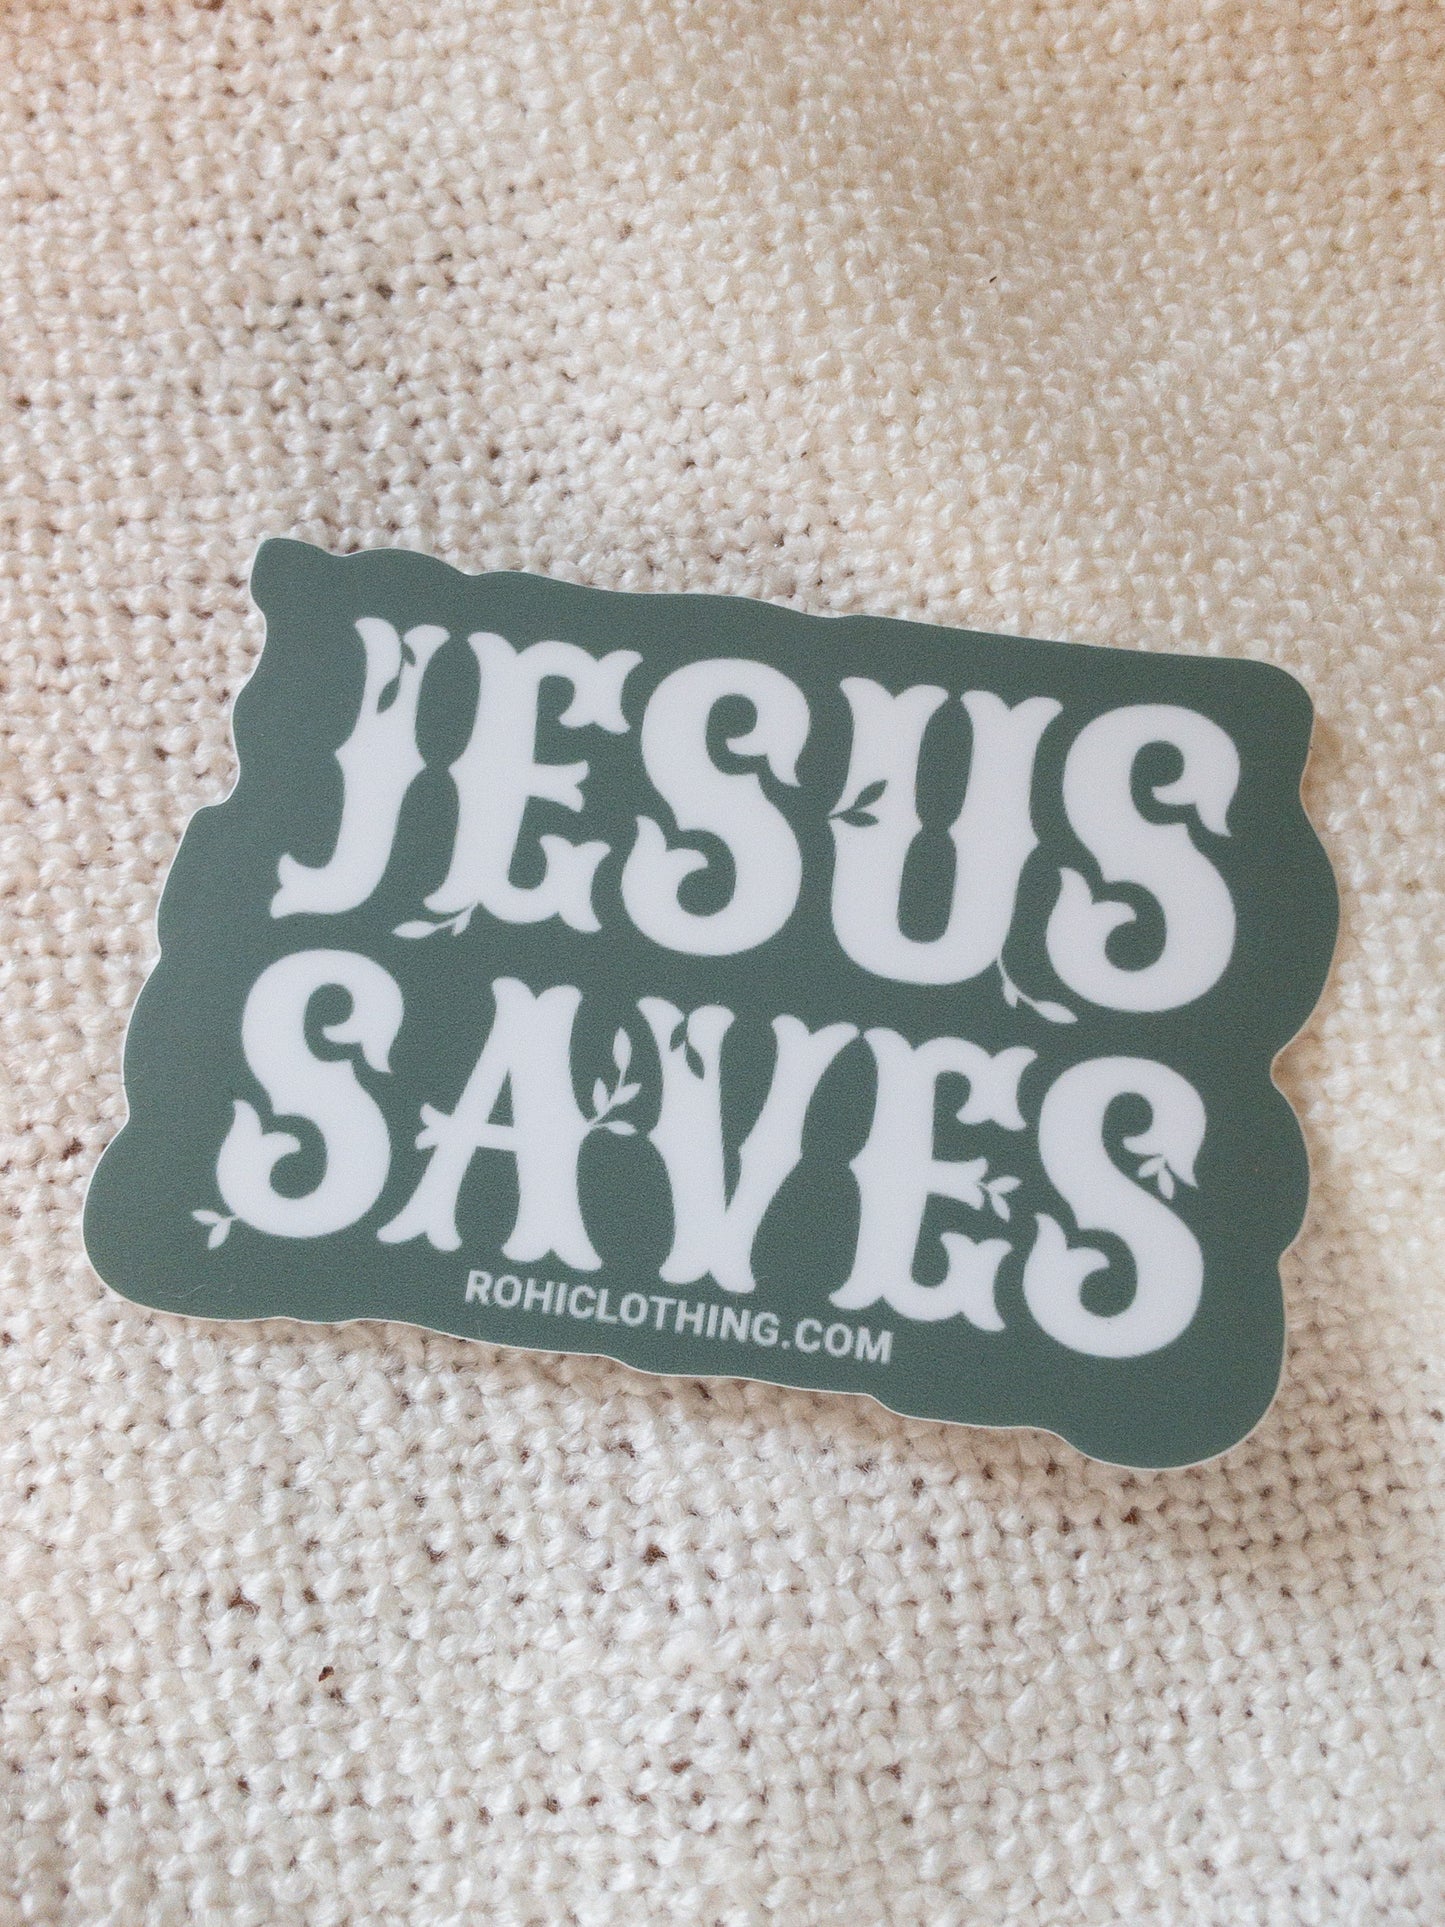 “JESUS SAVES” sticker